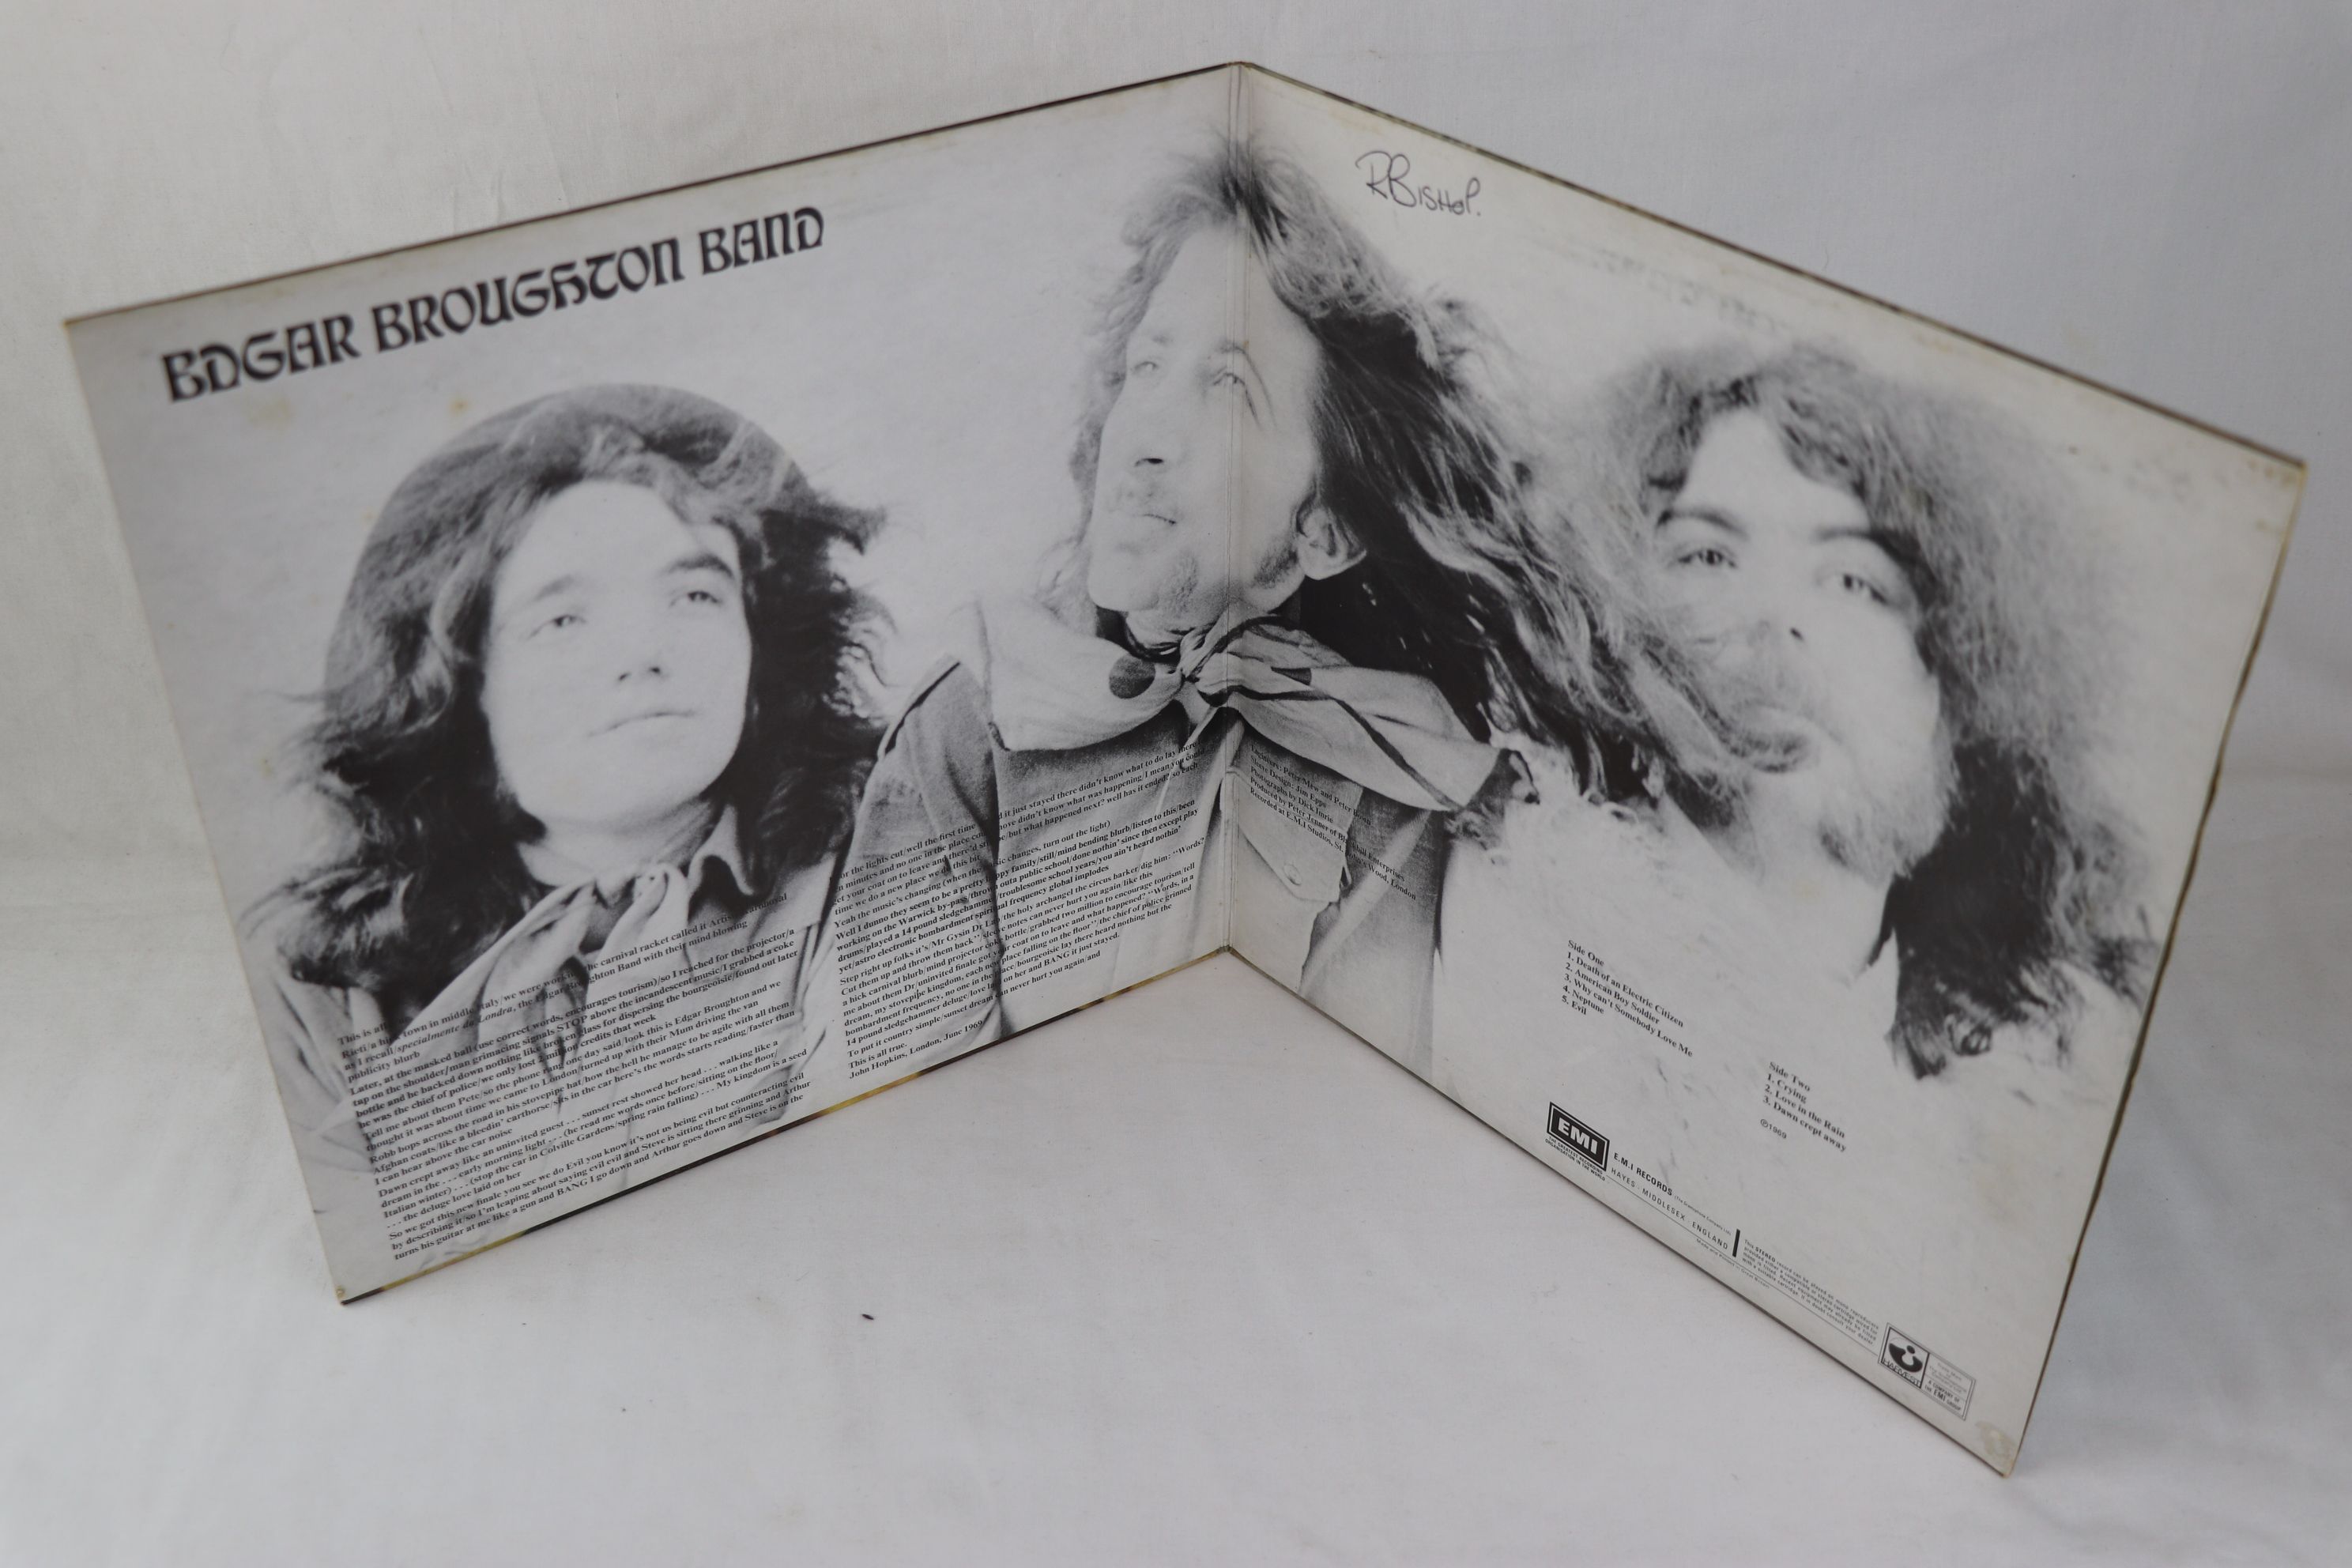 Vinyl - Edgar Broughton Band Wasa Wasa (SHVL 757) no EMI on label or Sold In UK, Harvest advertising - Image 2 of 7